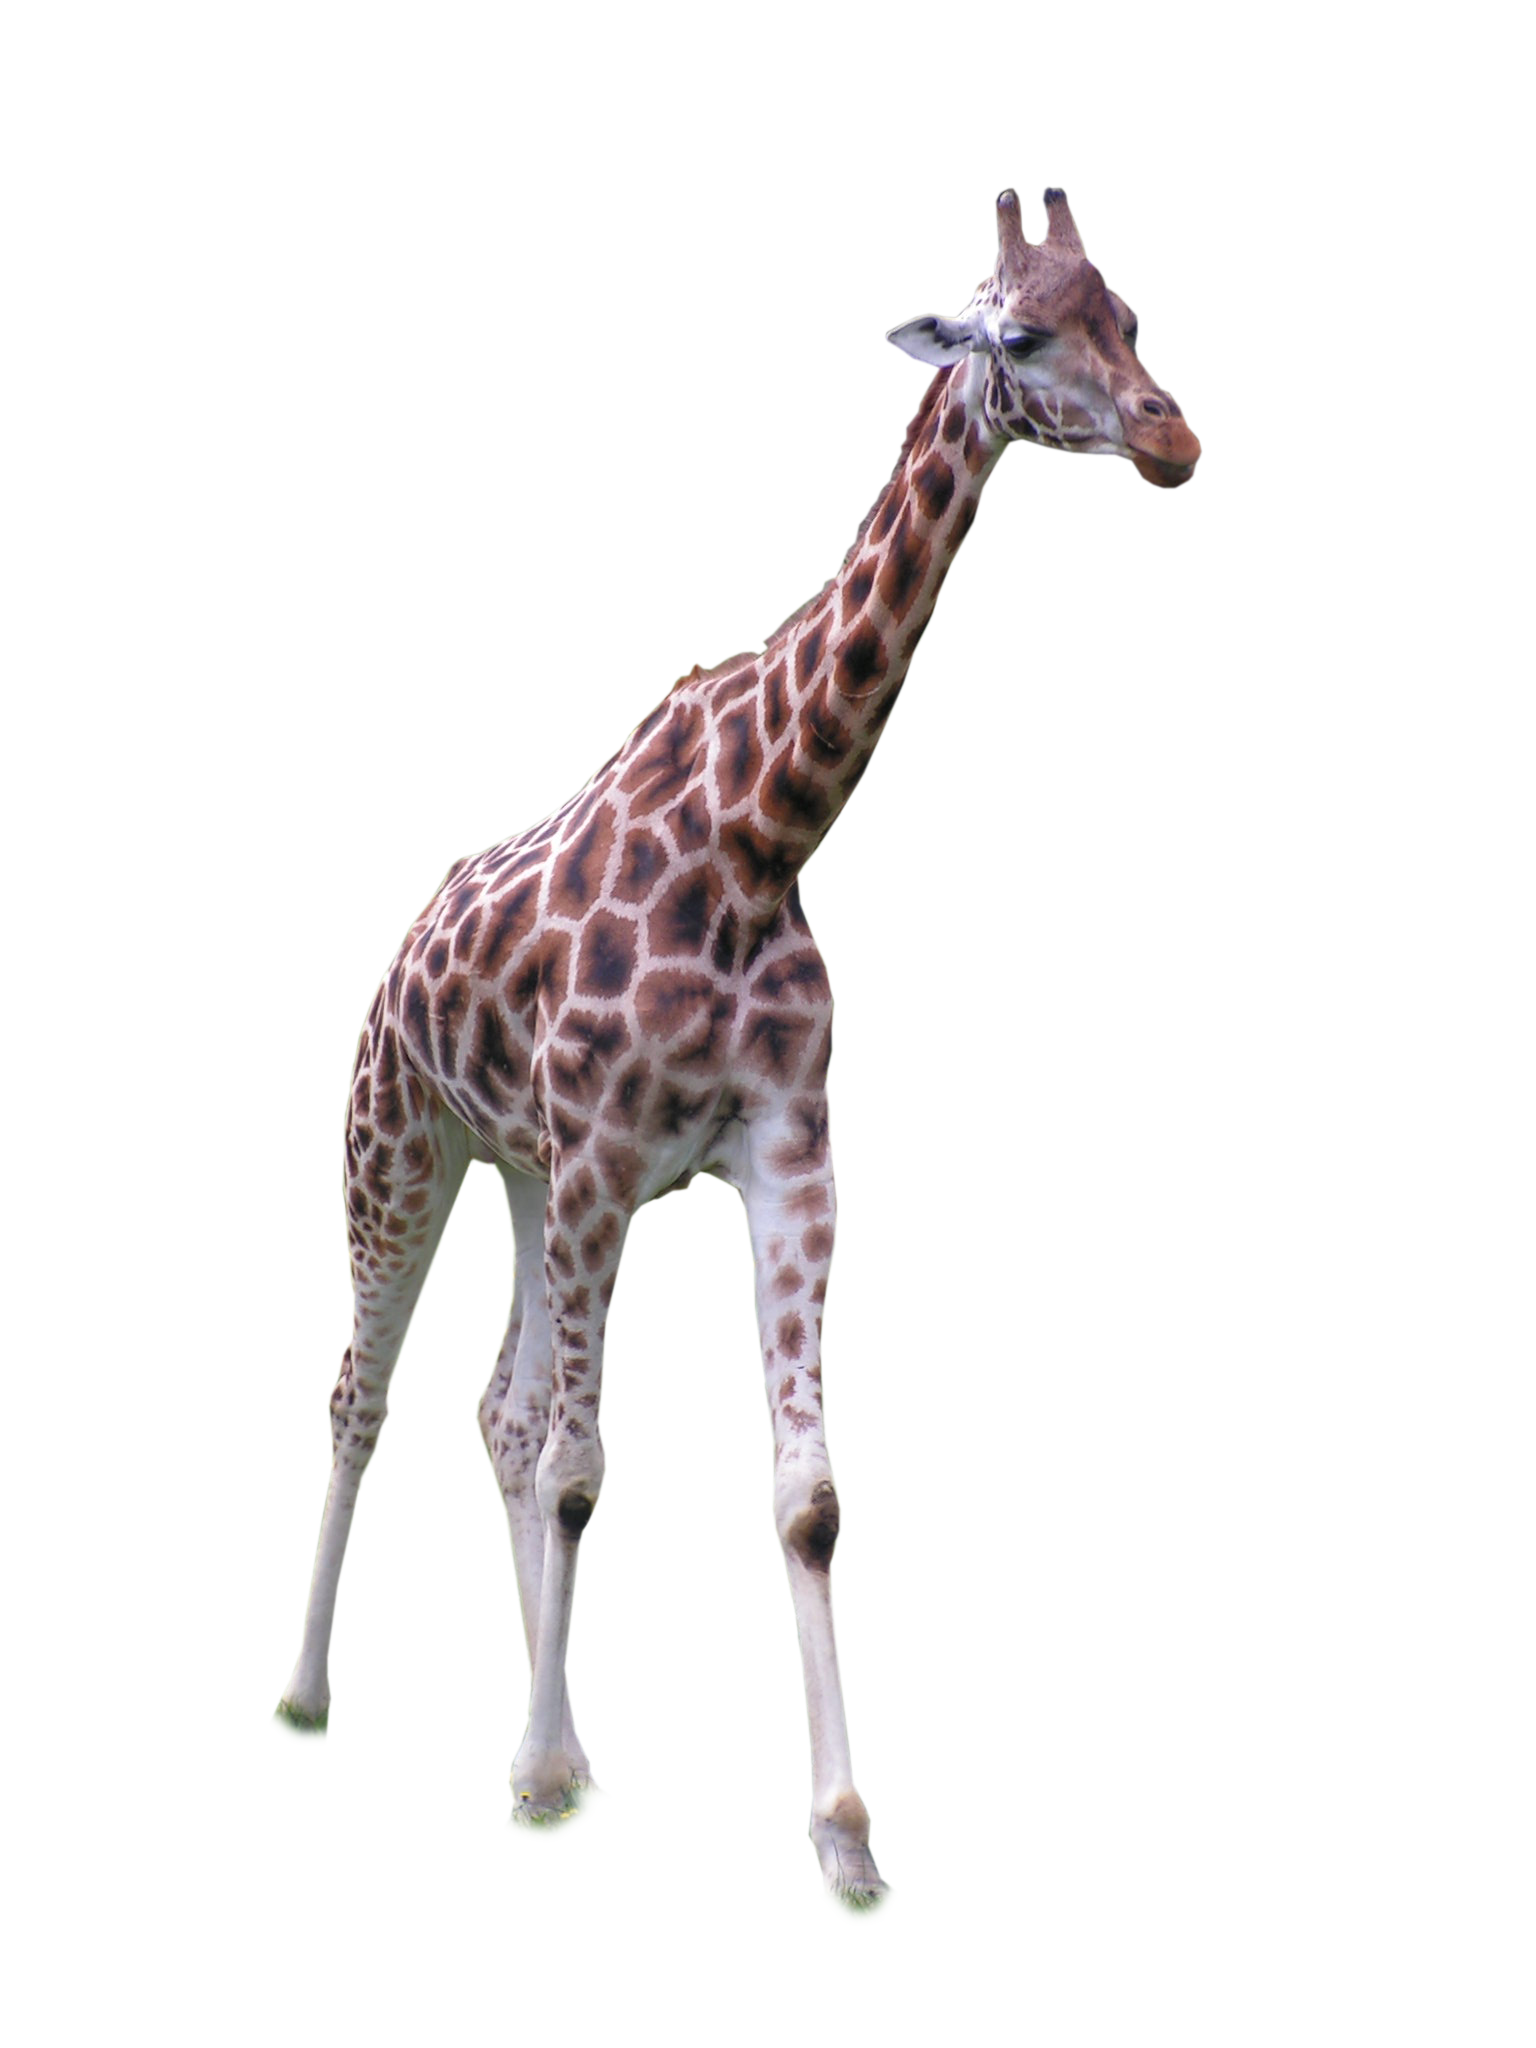 Giraffe PNG Image HQ